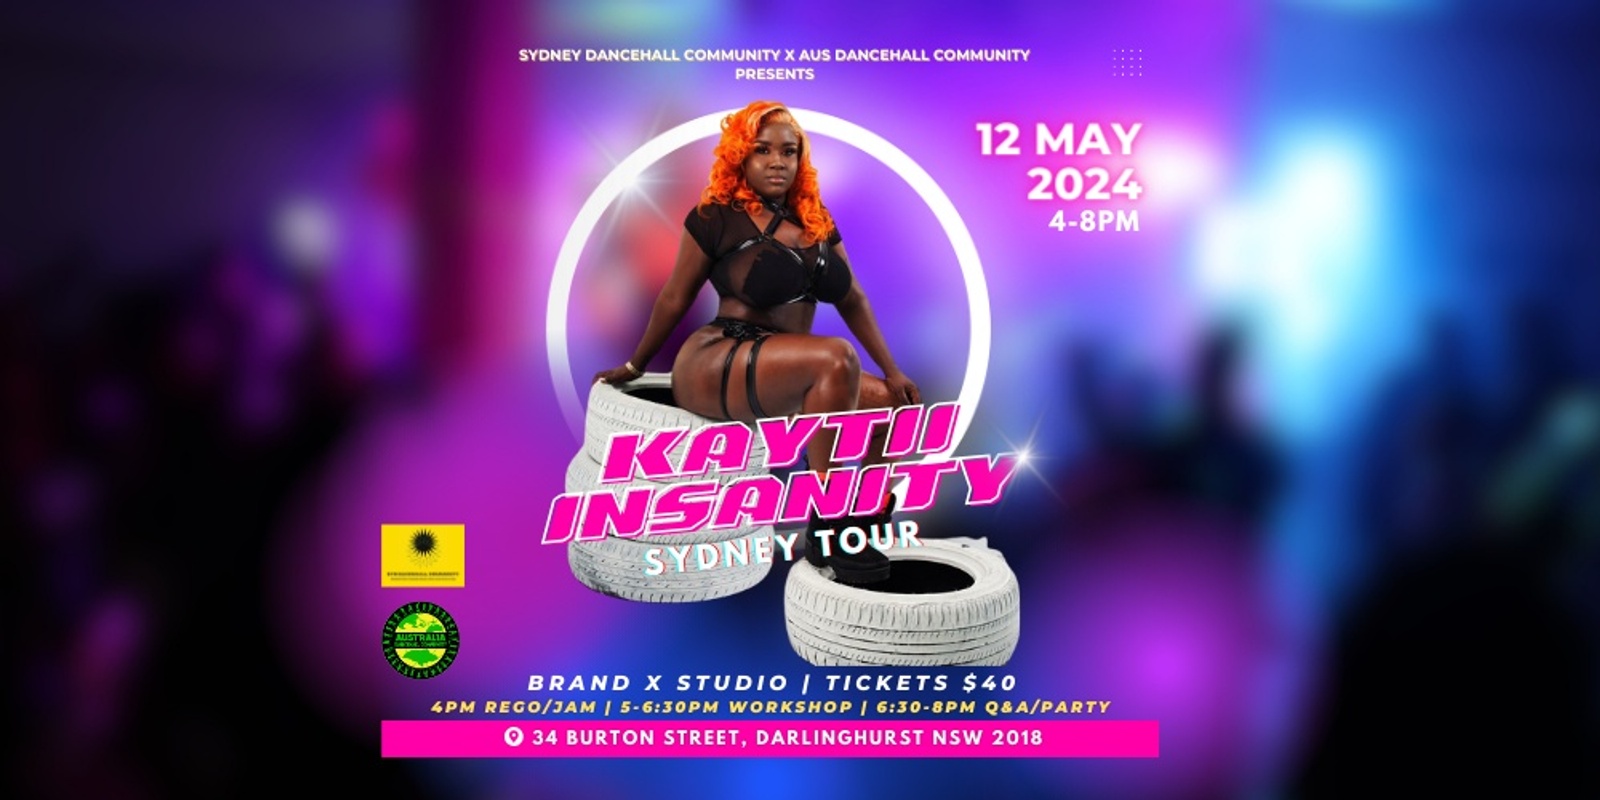 Banner image for Kaytii Insanity Sydney Tour